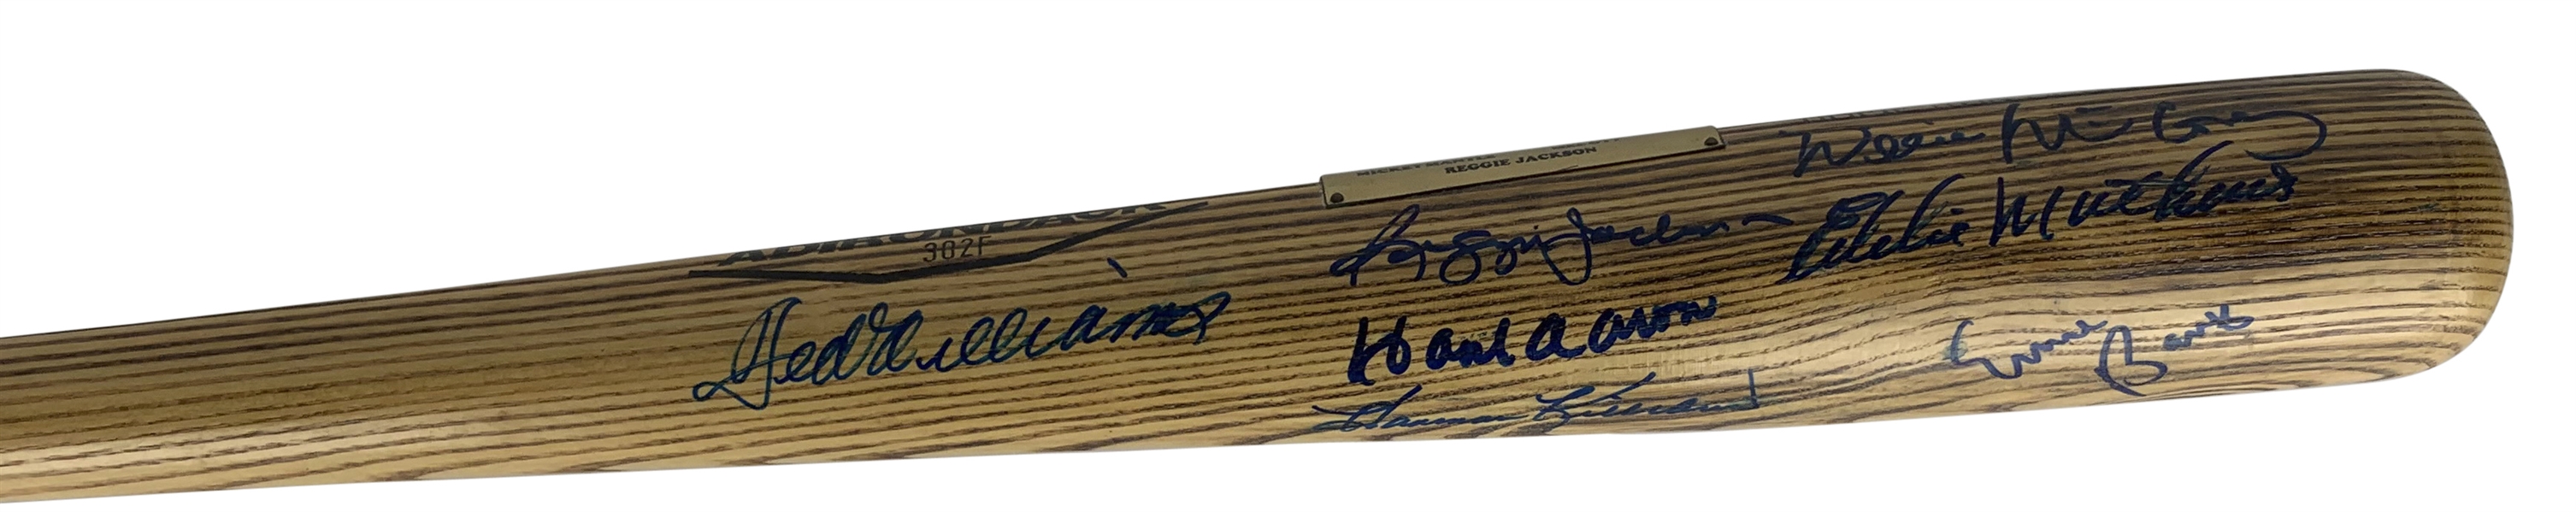 500 Home Run Club Signed Baseball Bat w/ Williams, Aaron, Mays & Others! (Beckett/BAS)